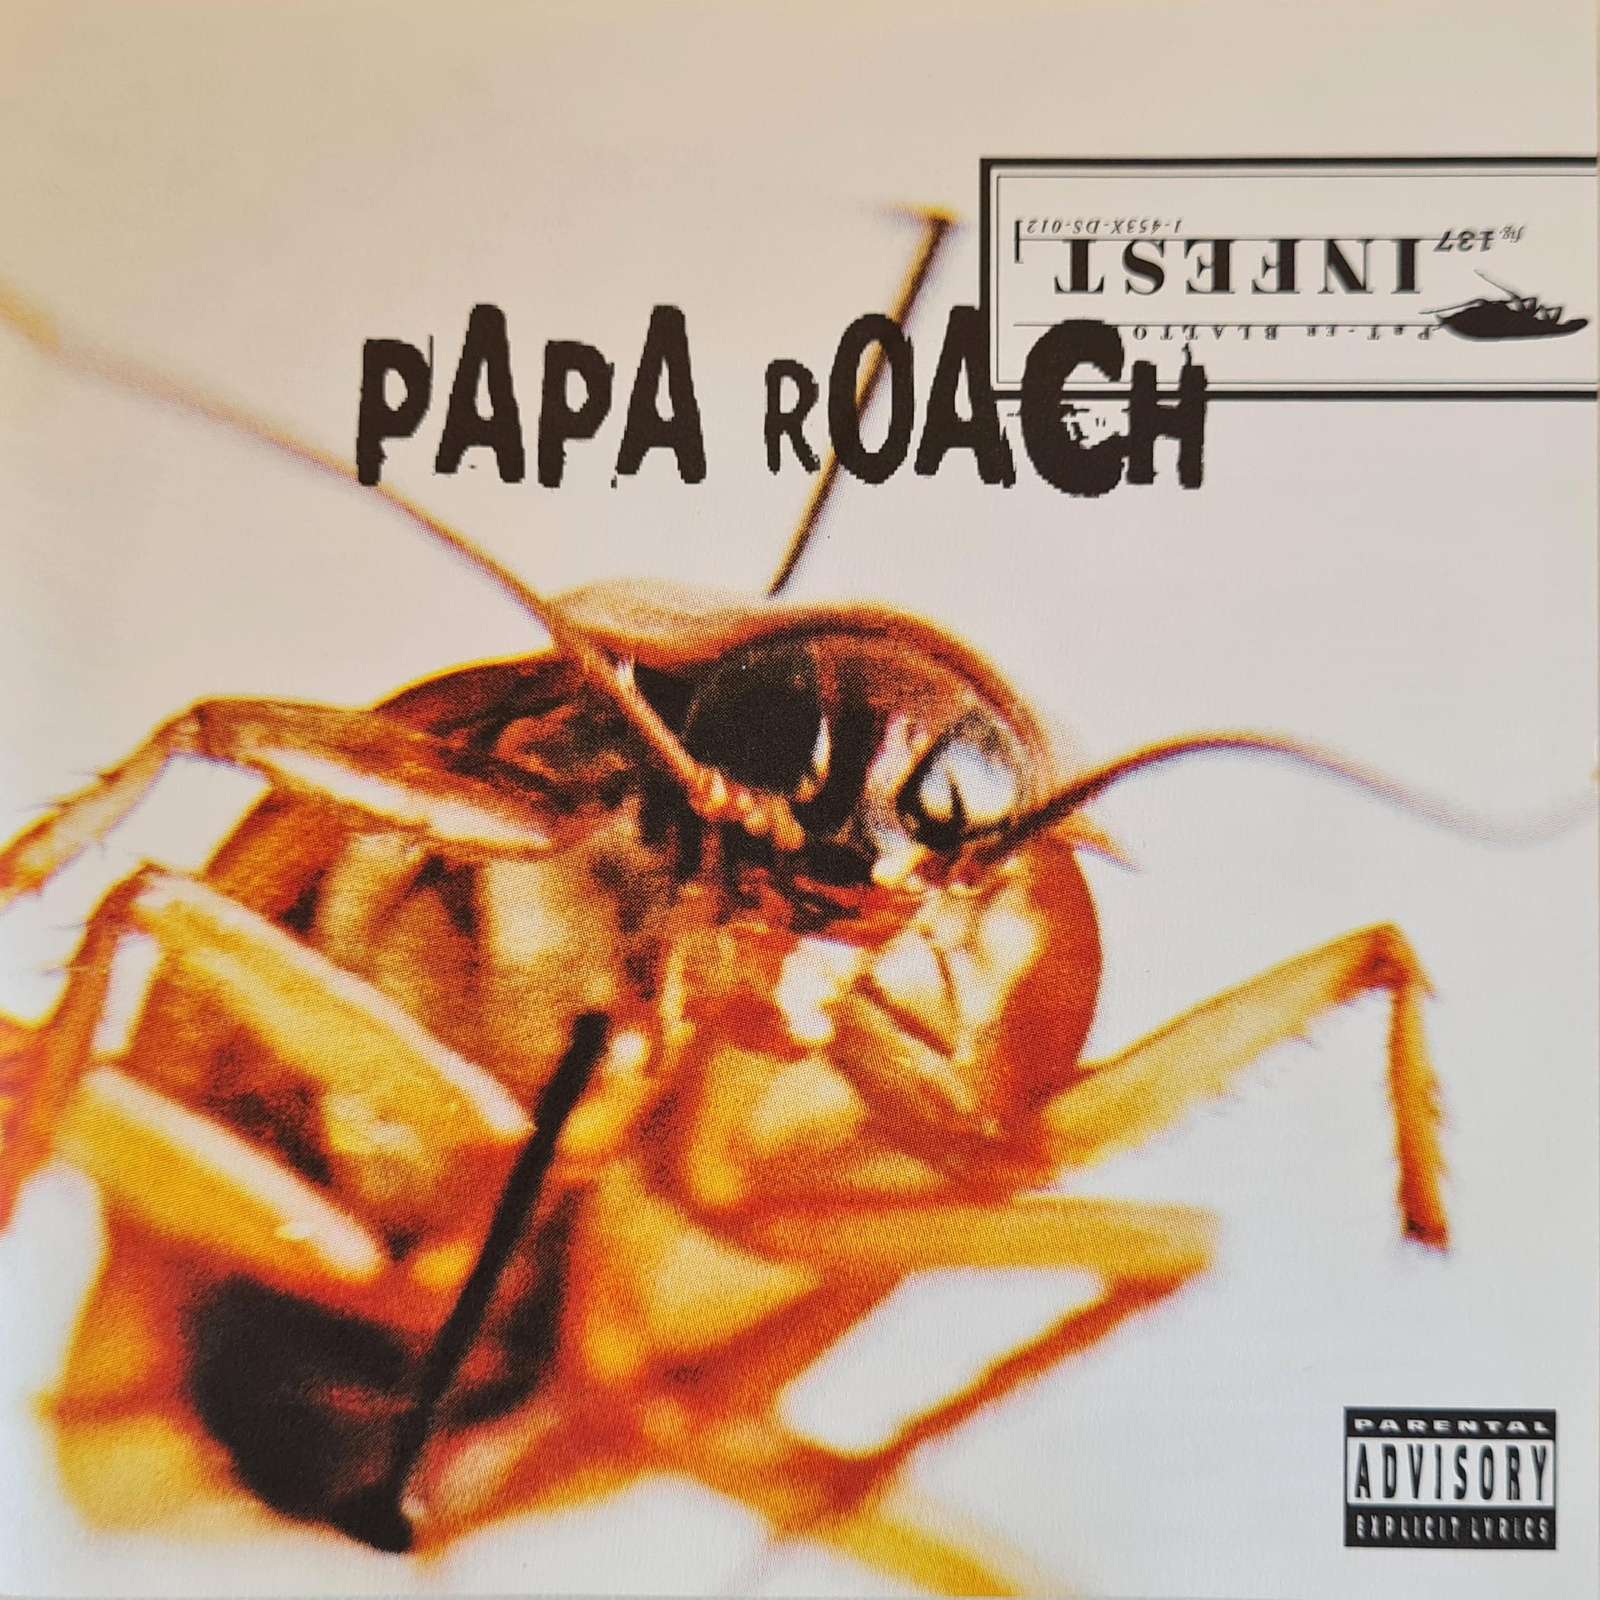 Papa Roach - Infest (CD)